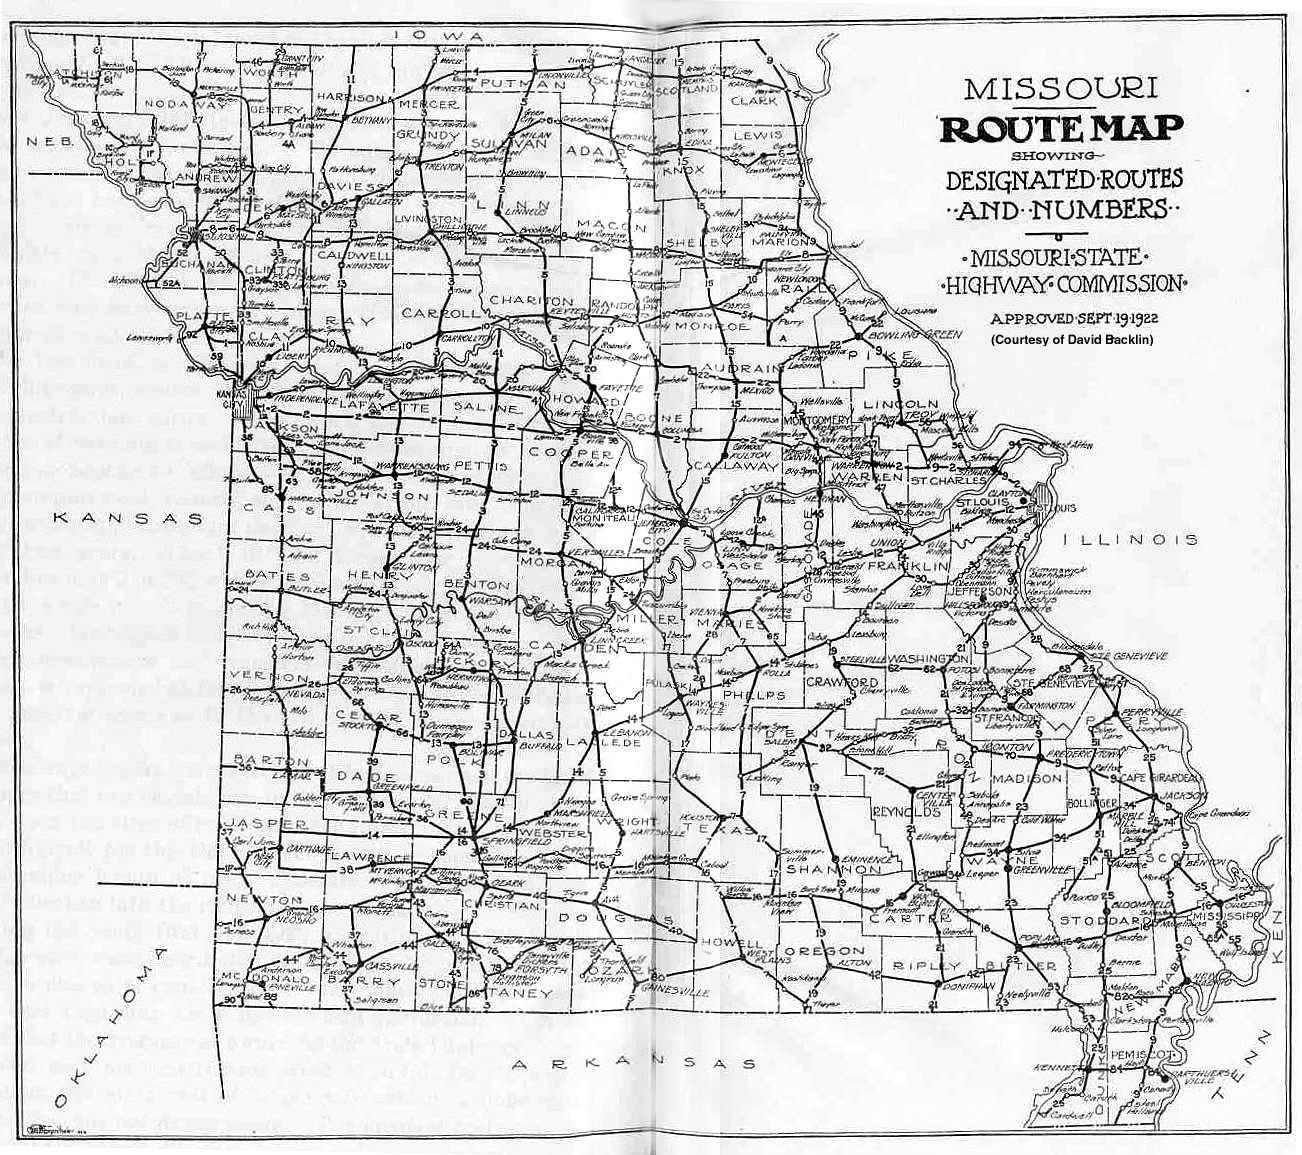 1922 Missouri Highway Commission map